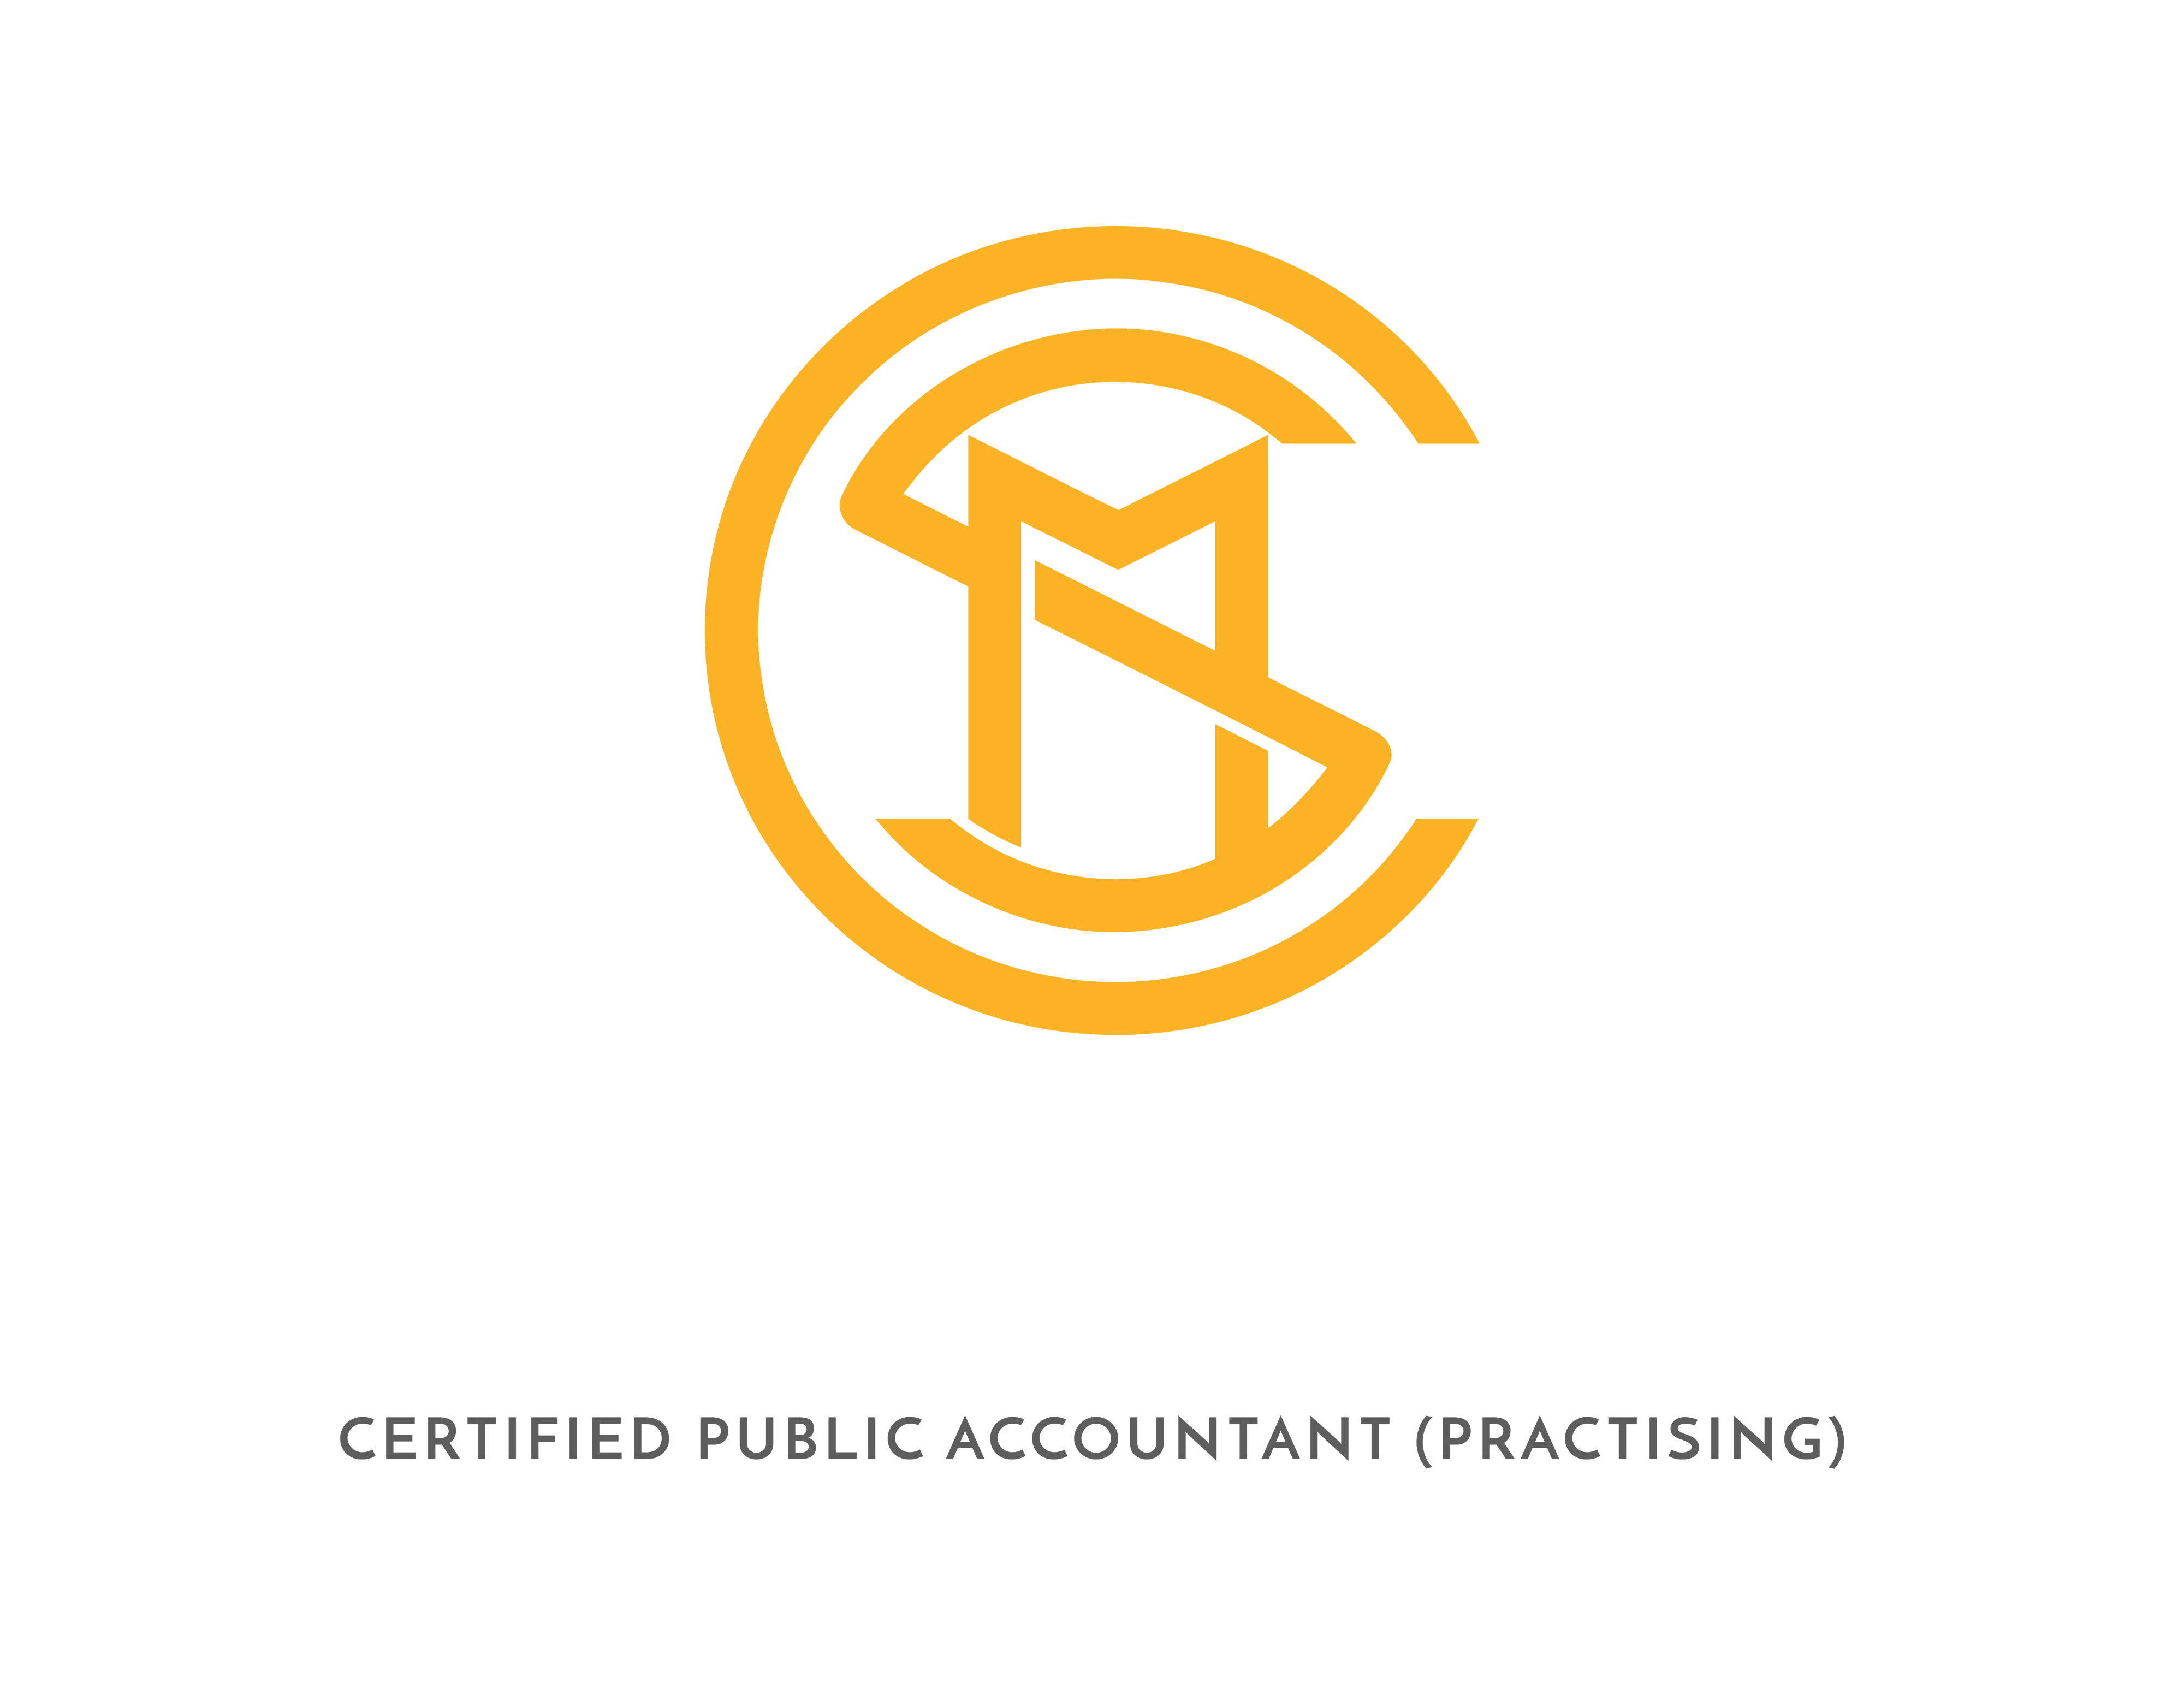 SO CHUN MAN CERTIFIED PUBLIC ACCOUNTANT(PRACTISING)